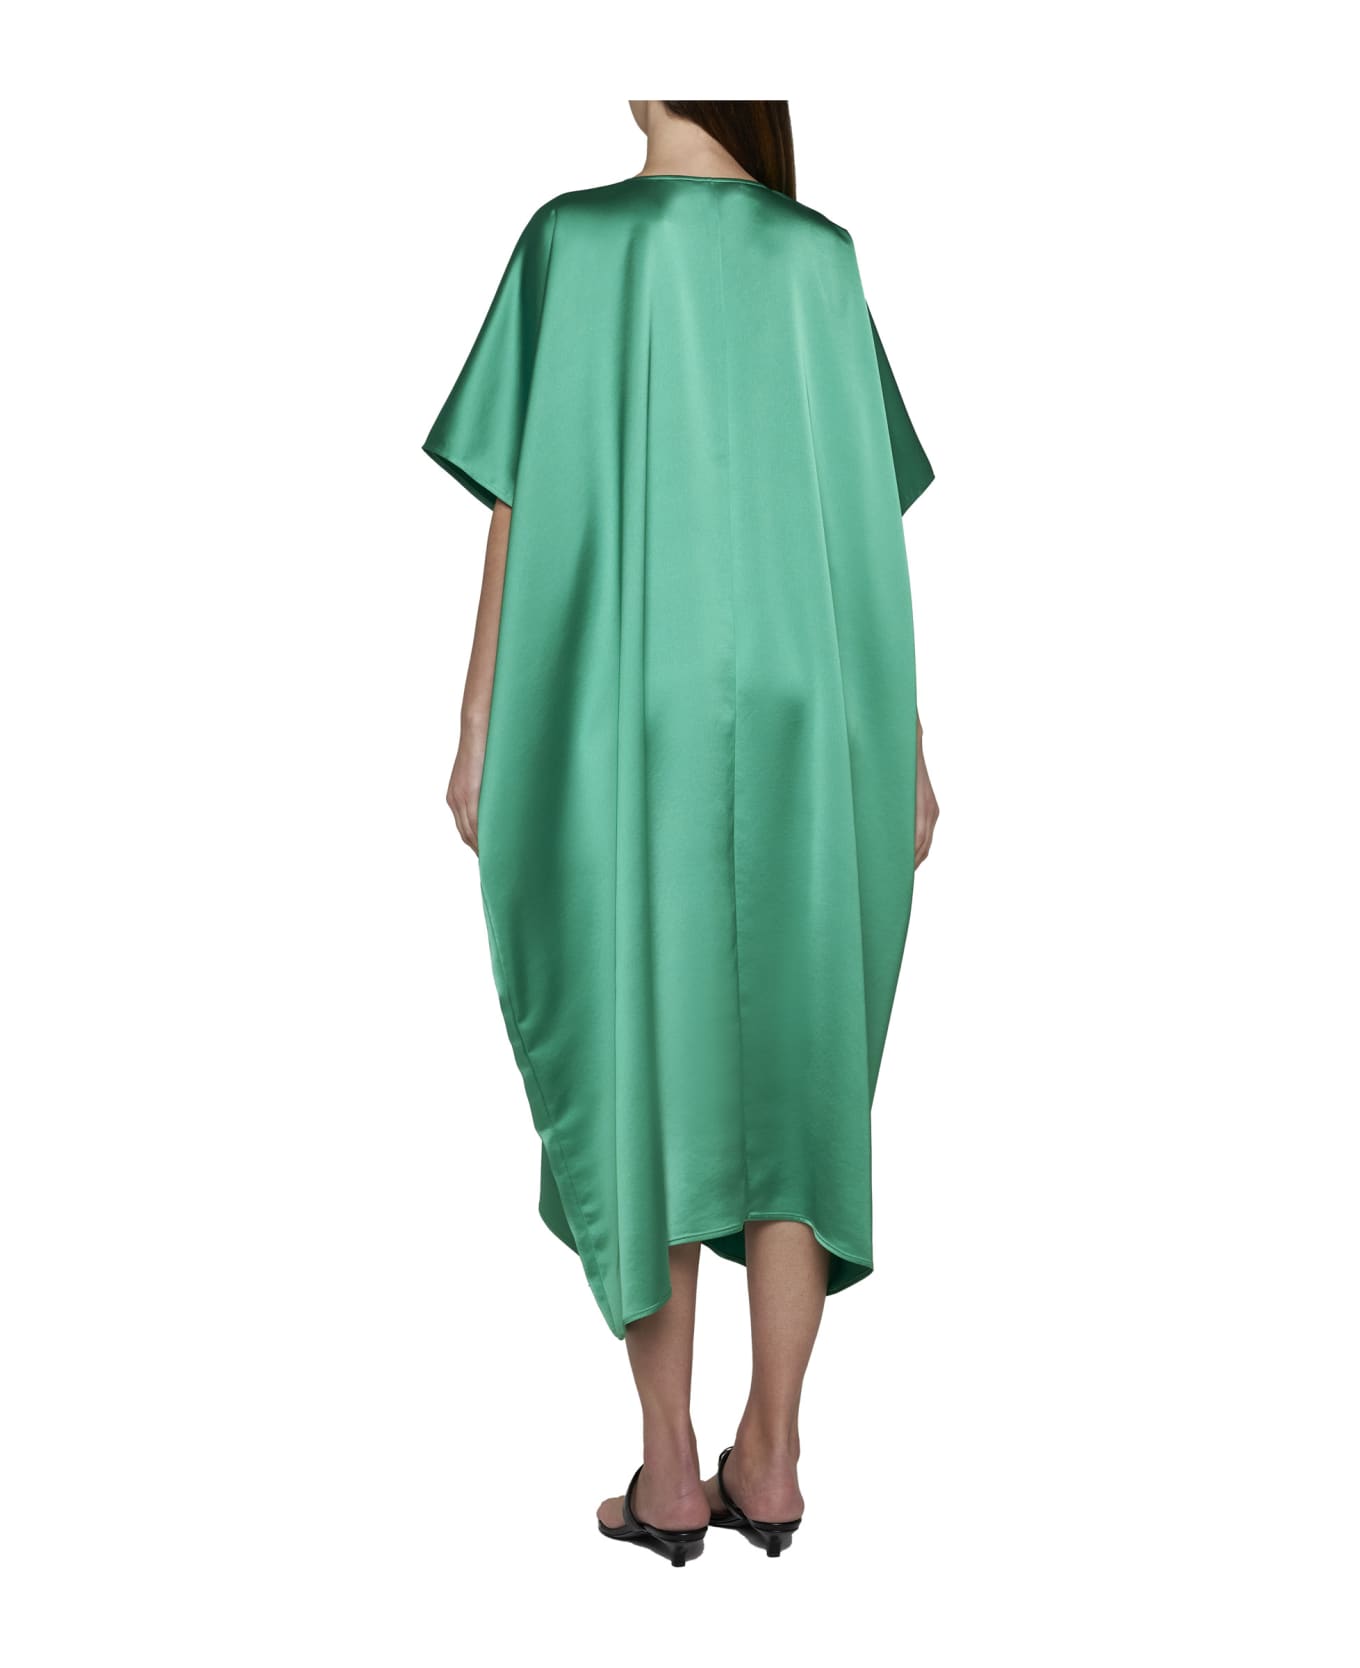 Blanca Vita Dress - Green